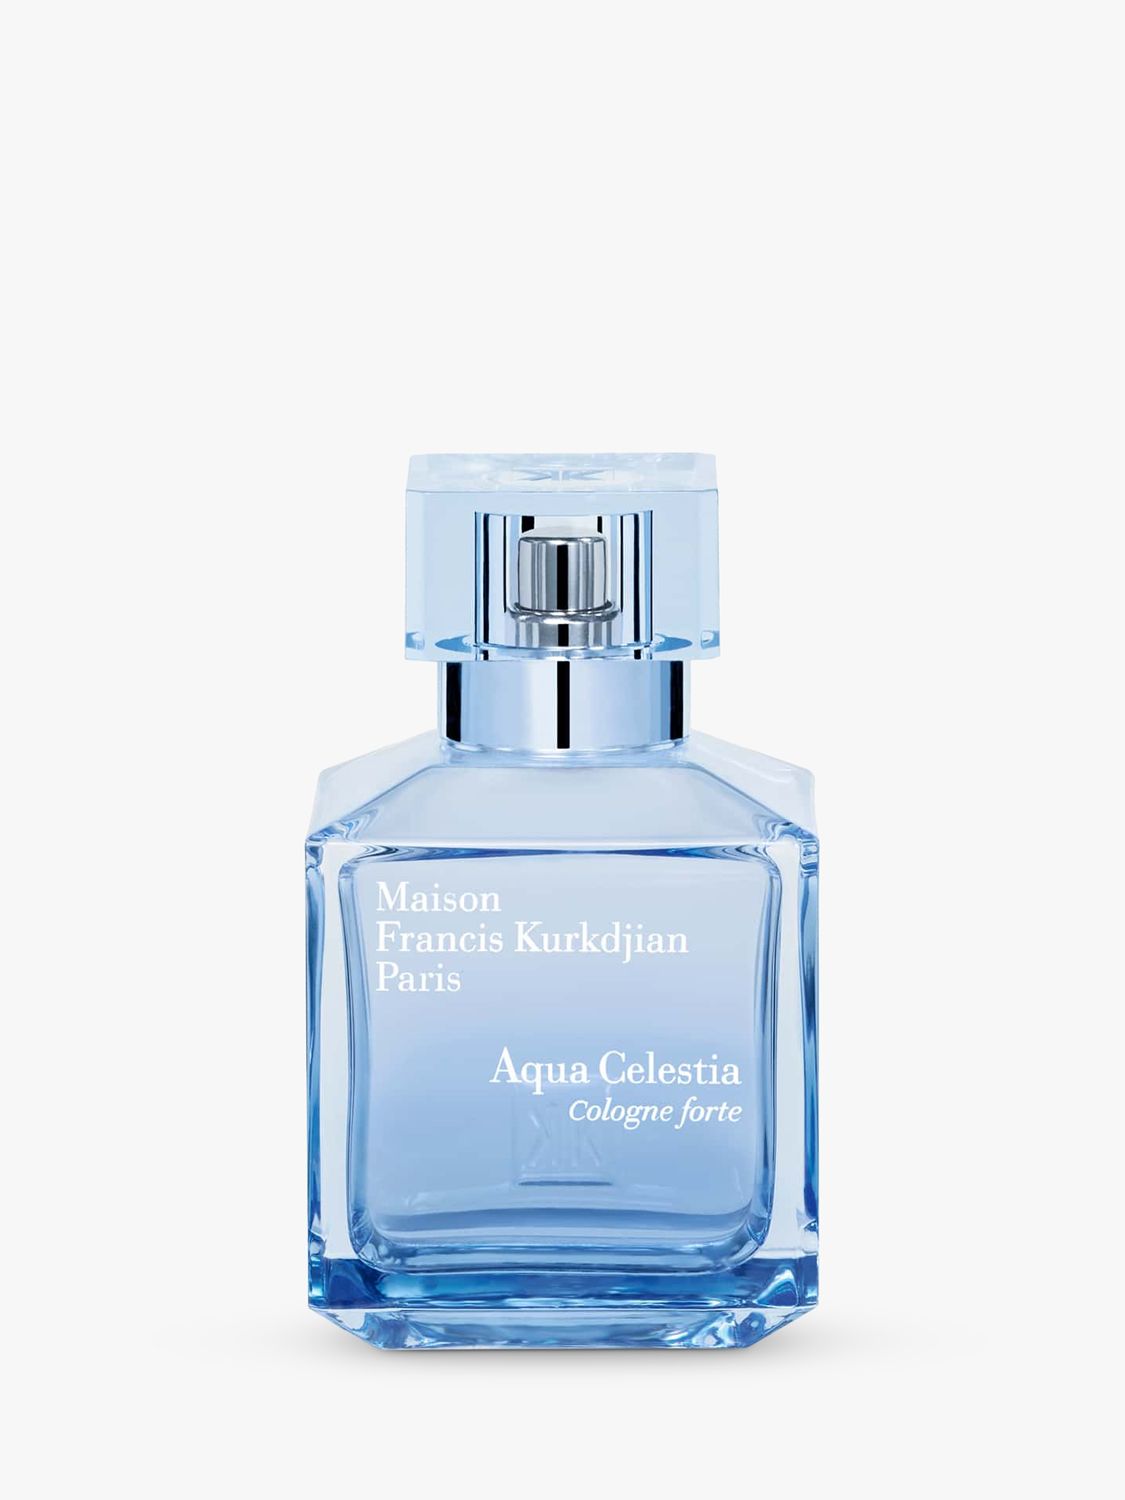 Maison Francis Kurkdjian Aqua Celestia Cologne Forte Eau de Parfum, 70ml